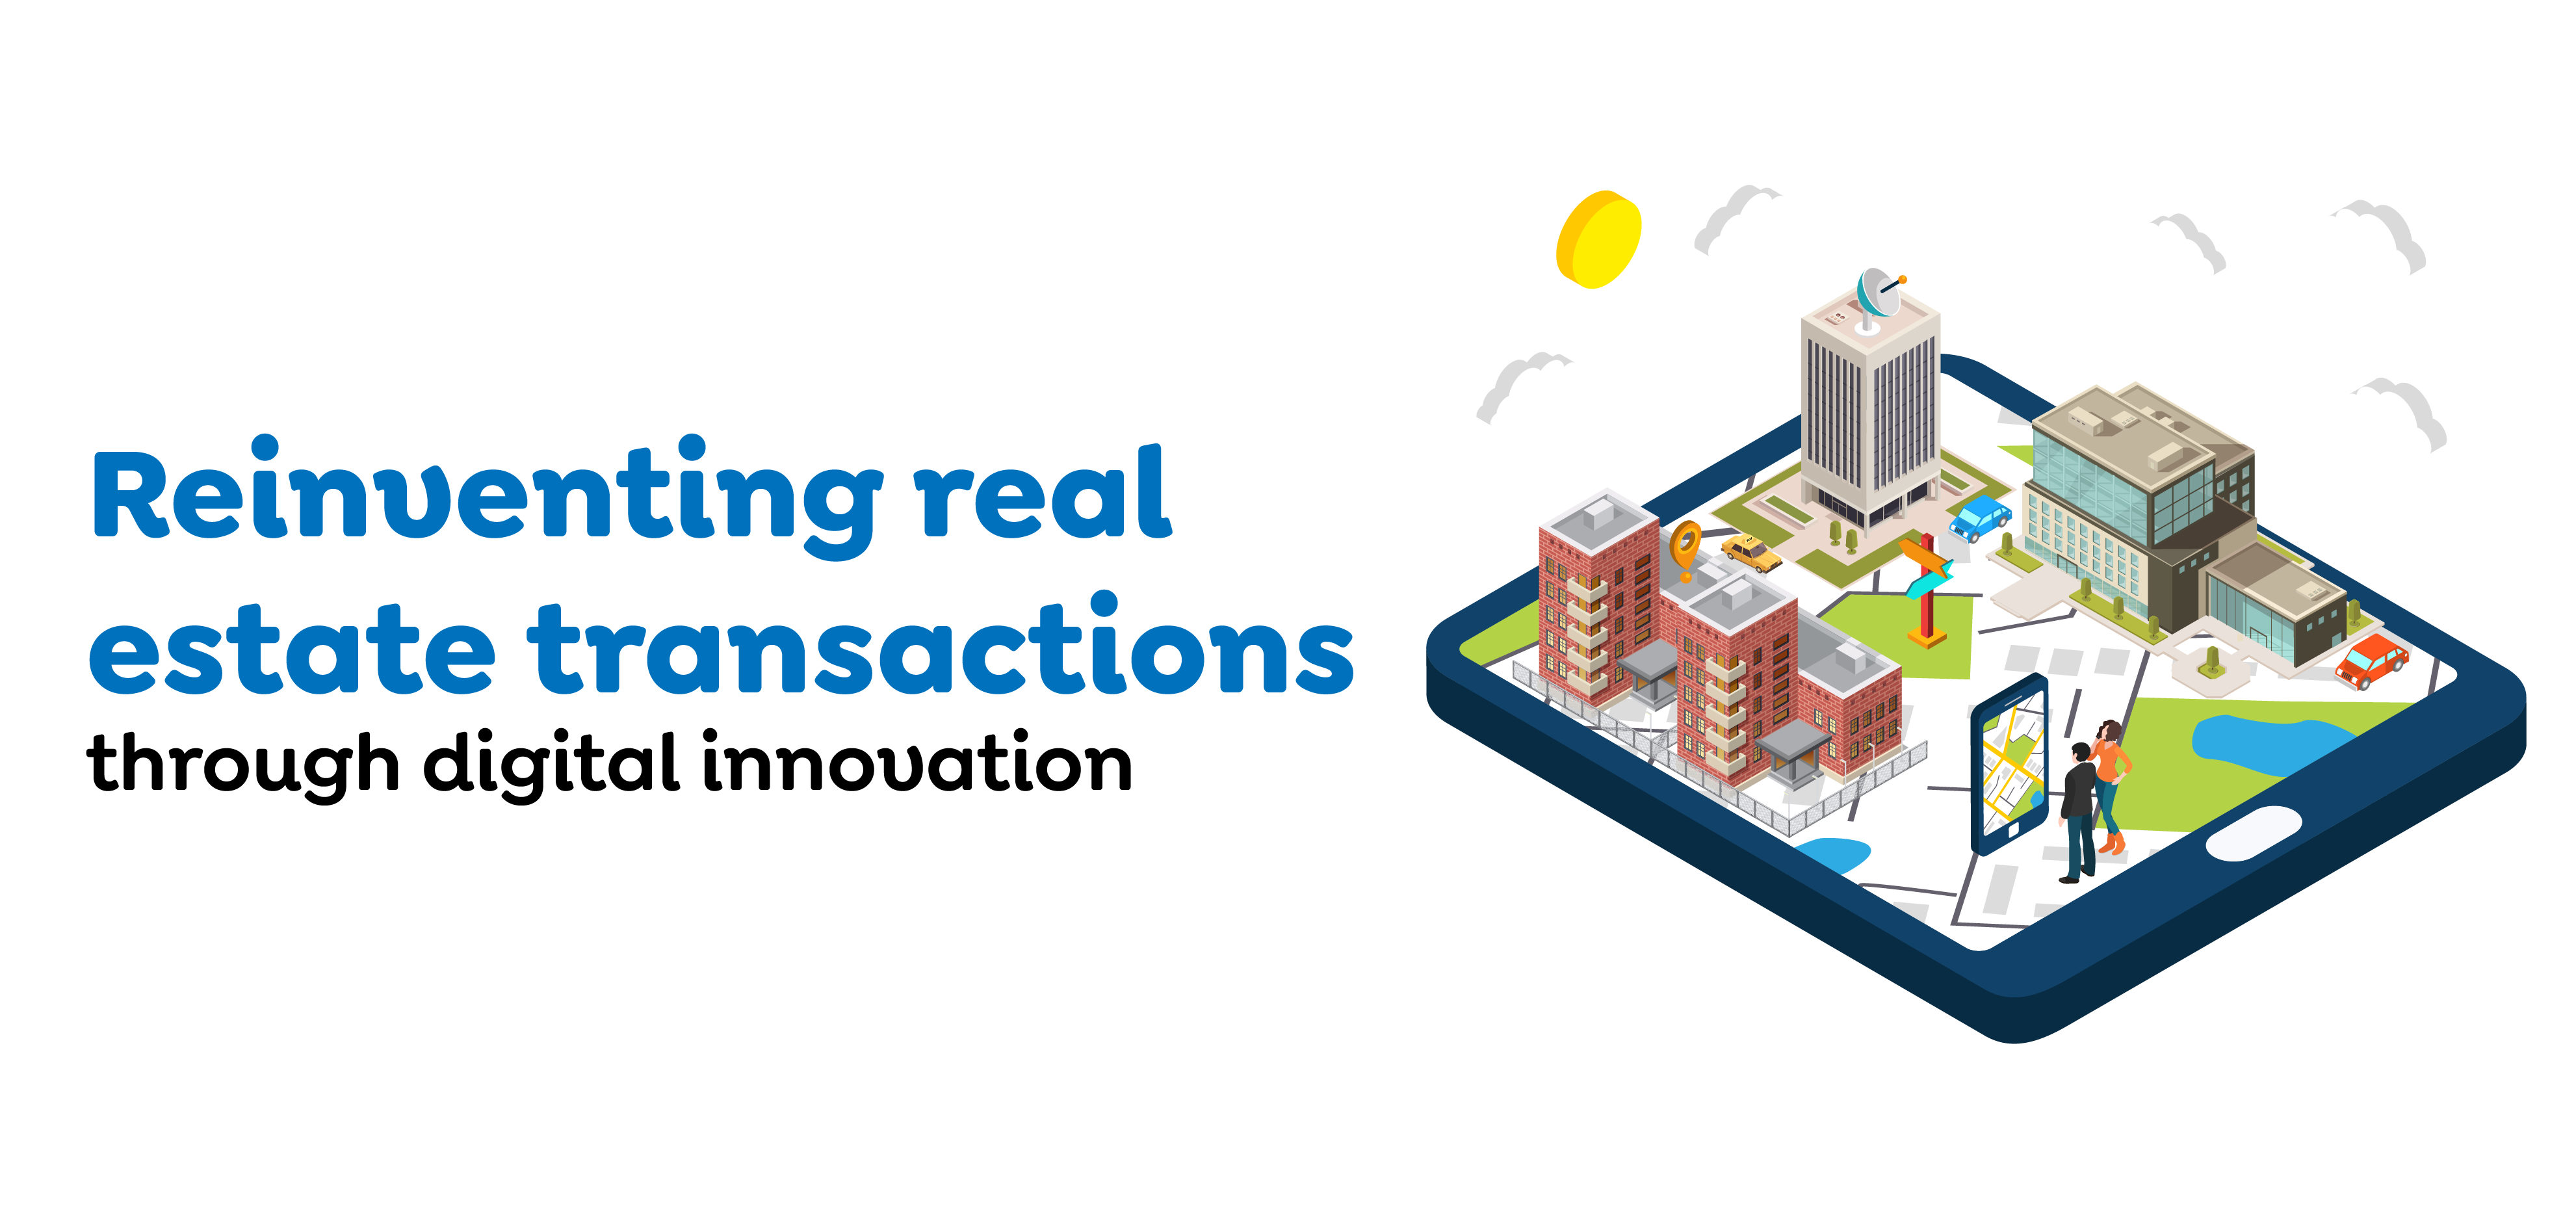 Reinventing real estate transactions through digital innovation